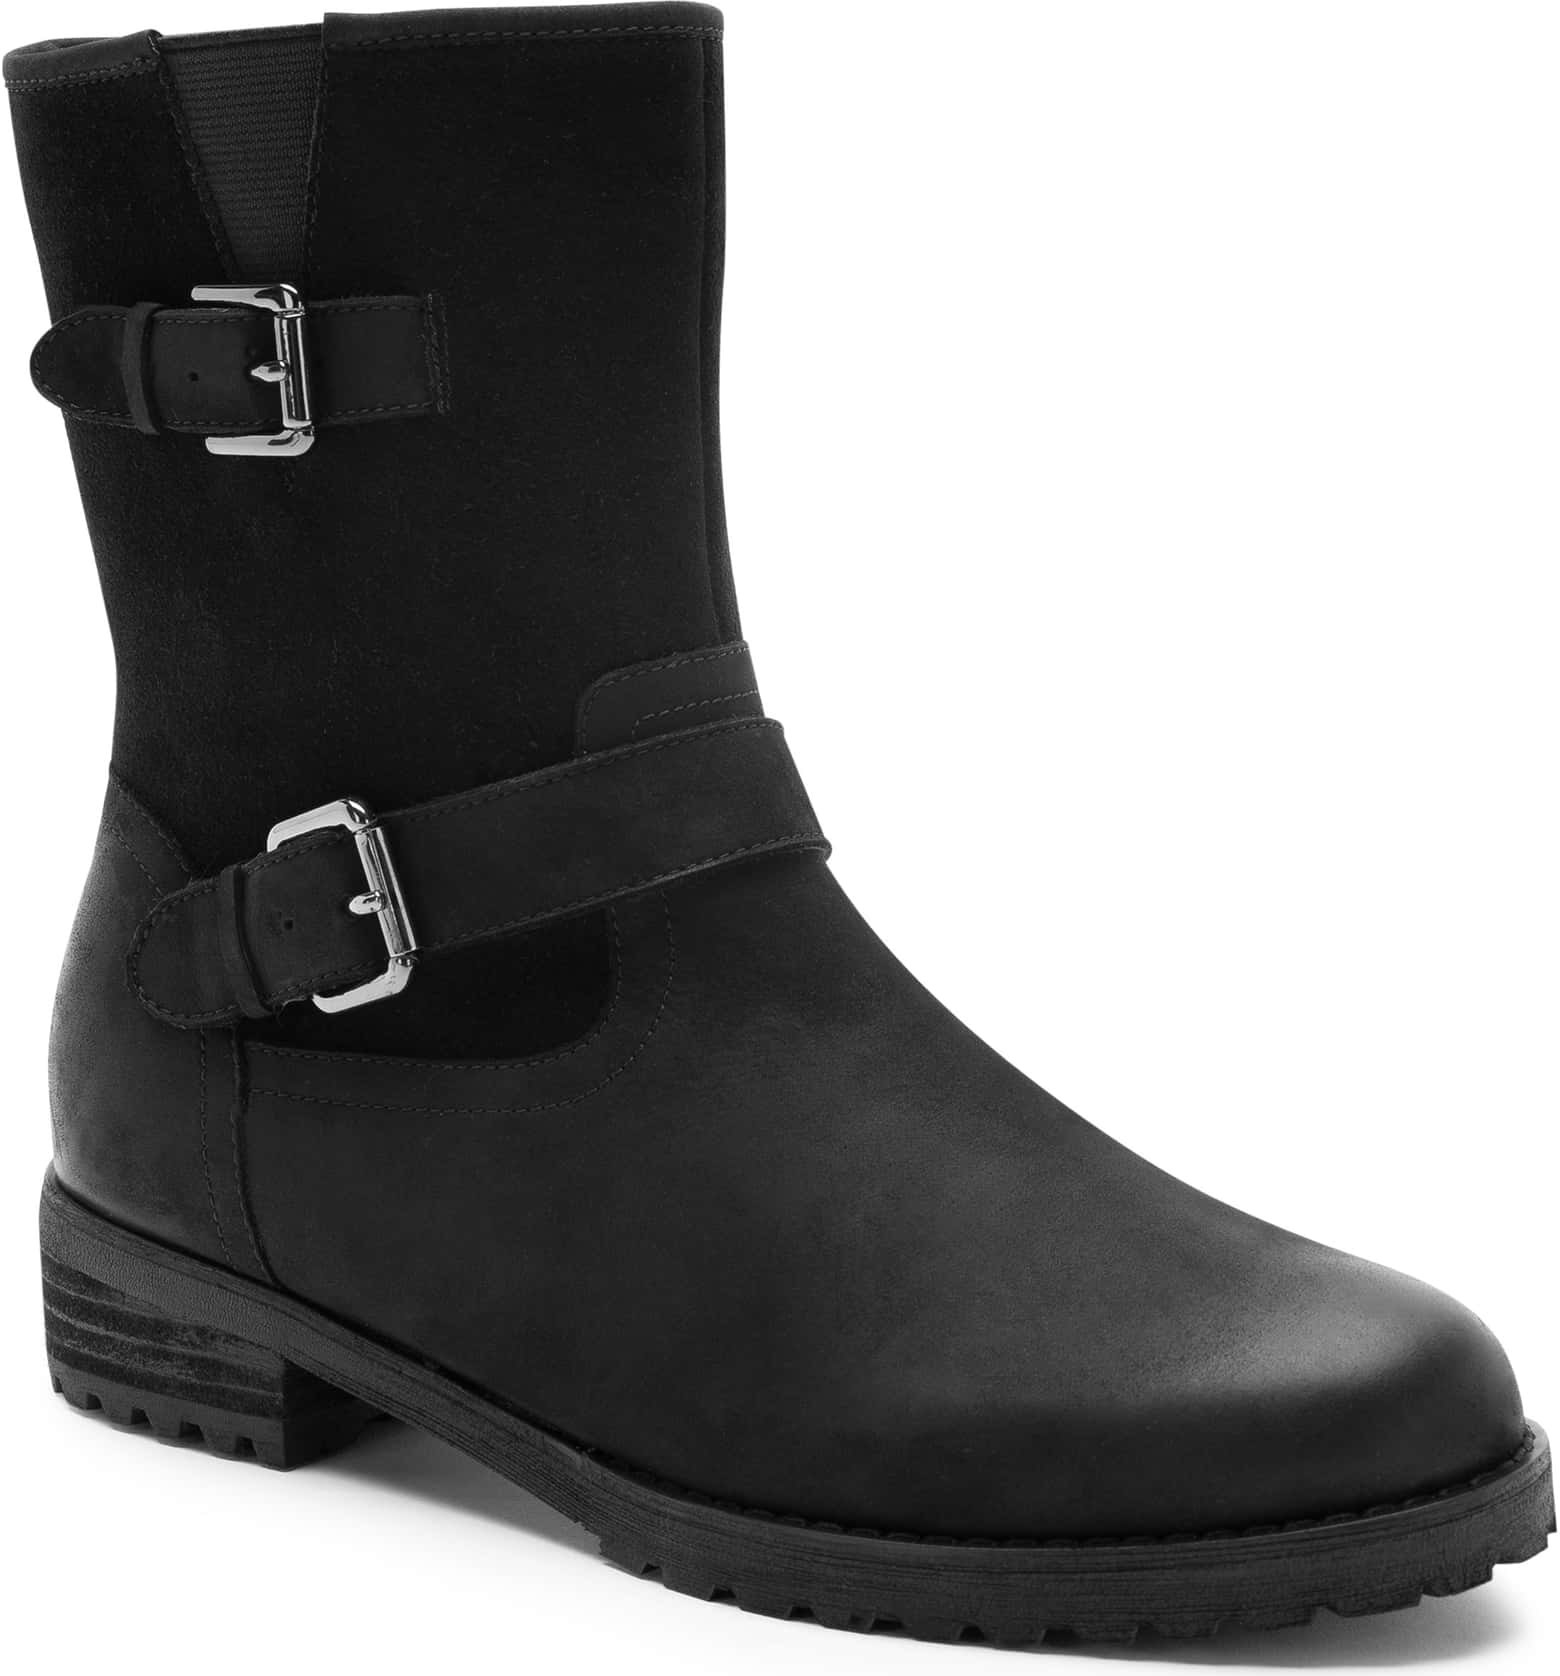 fashionable waterproof boots